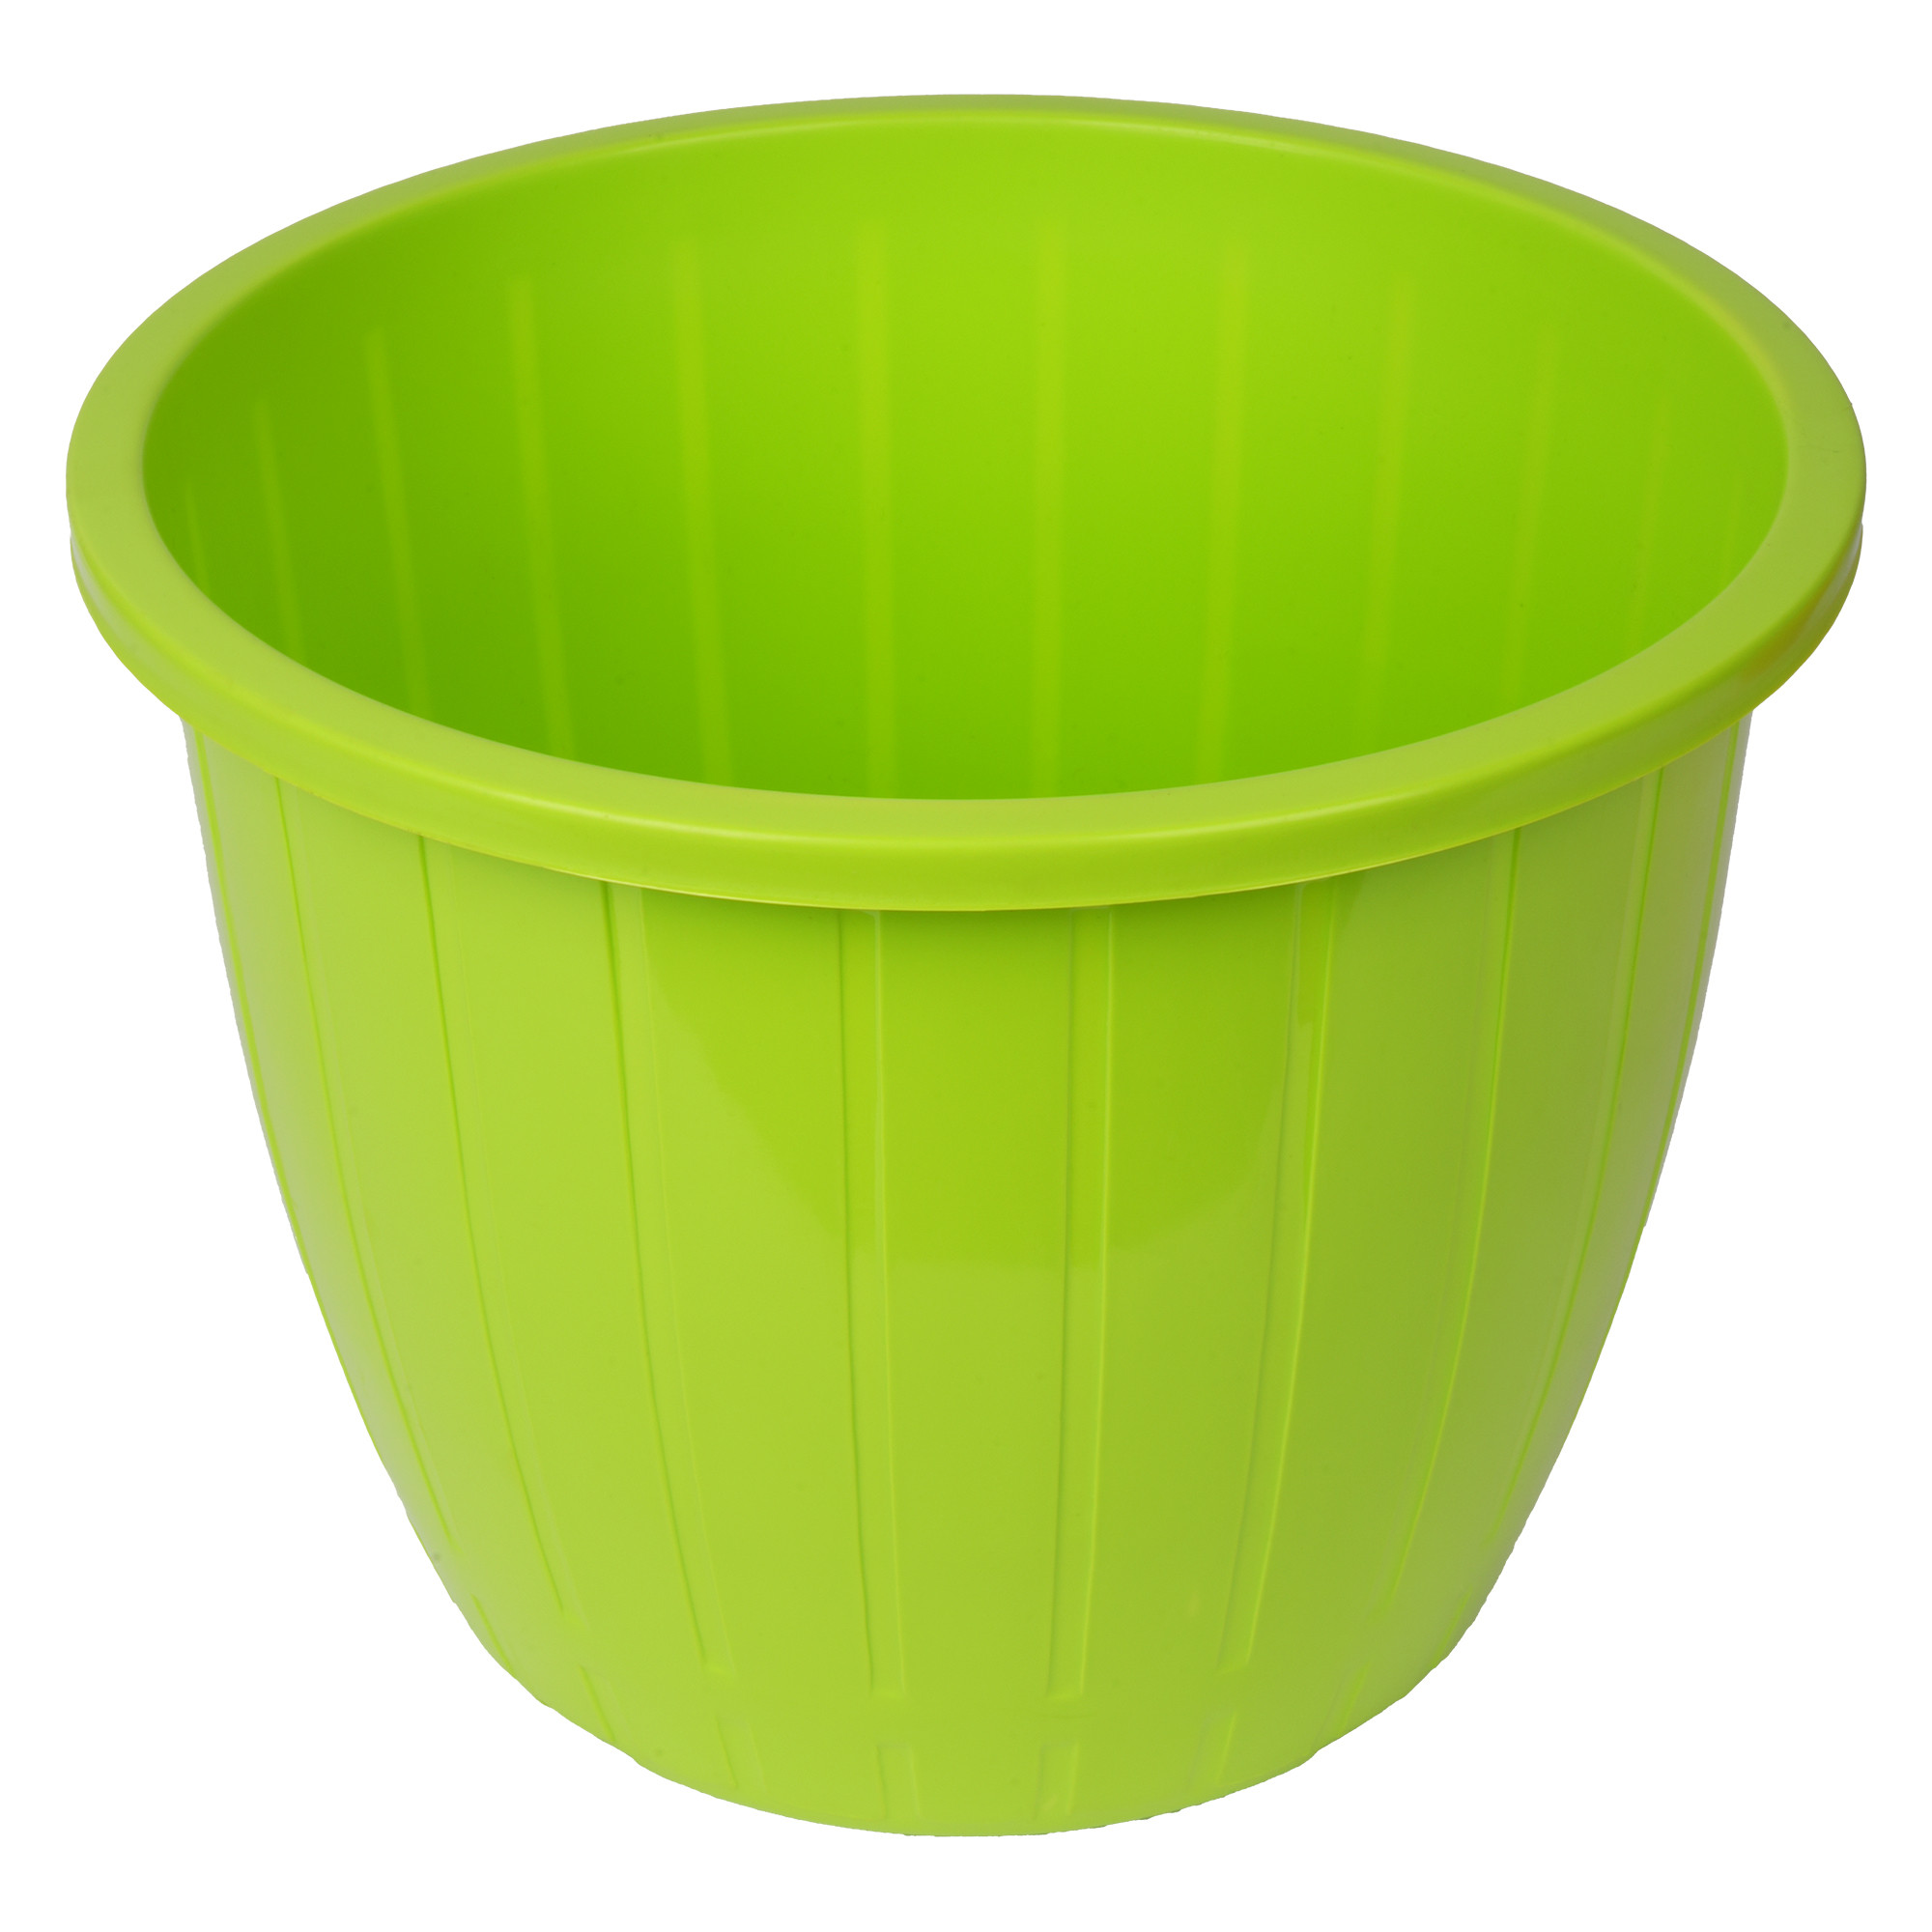 Kuber Industries Flower Pot | Flower Pots for Indoor & Outdoor | Plastic Pot for Gardening | Planter for Flower | Balcony Pots for Home Decor | Duro Flower Pot | 8 Inch | Pack of 3 | Multi